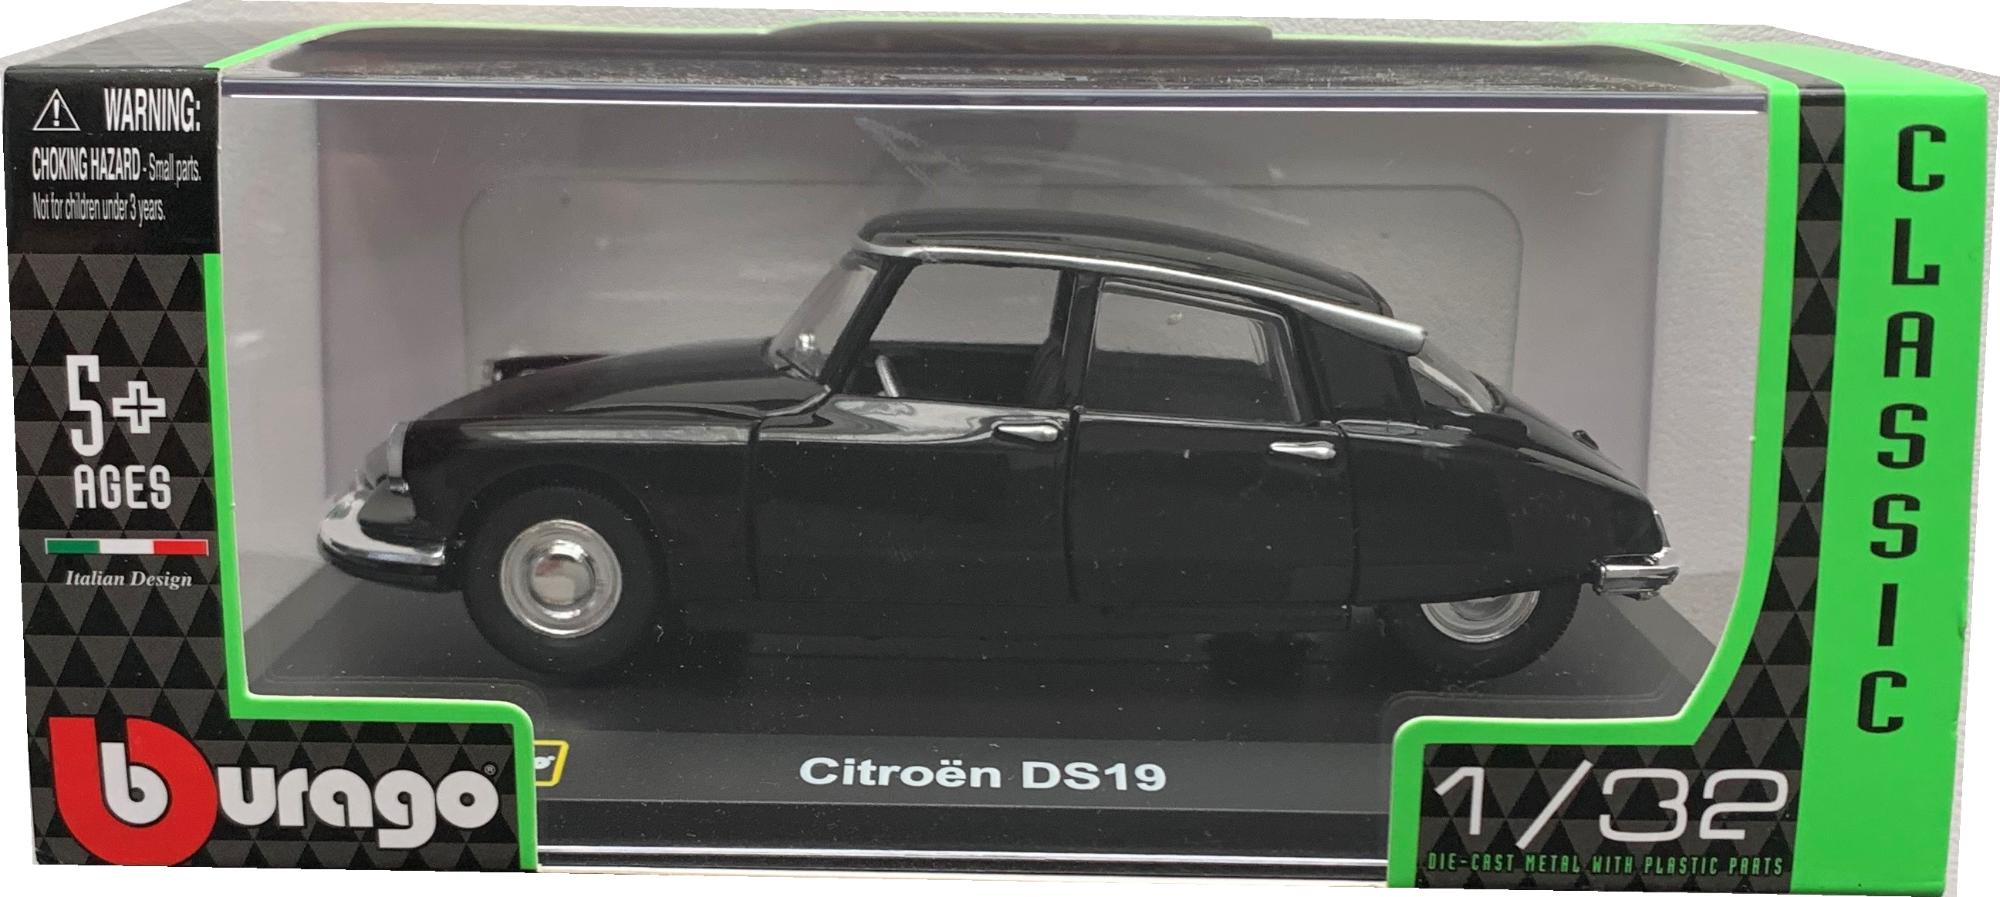 Citroen DS19 1957 in black 1:32 scale model from Bburago